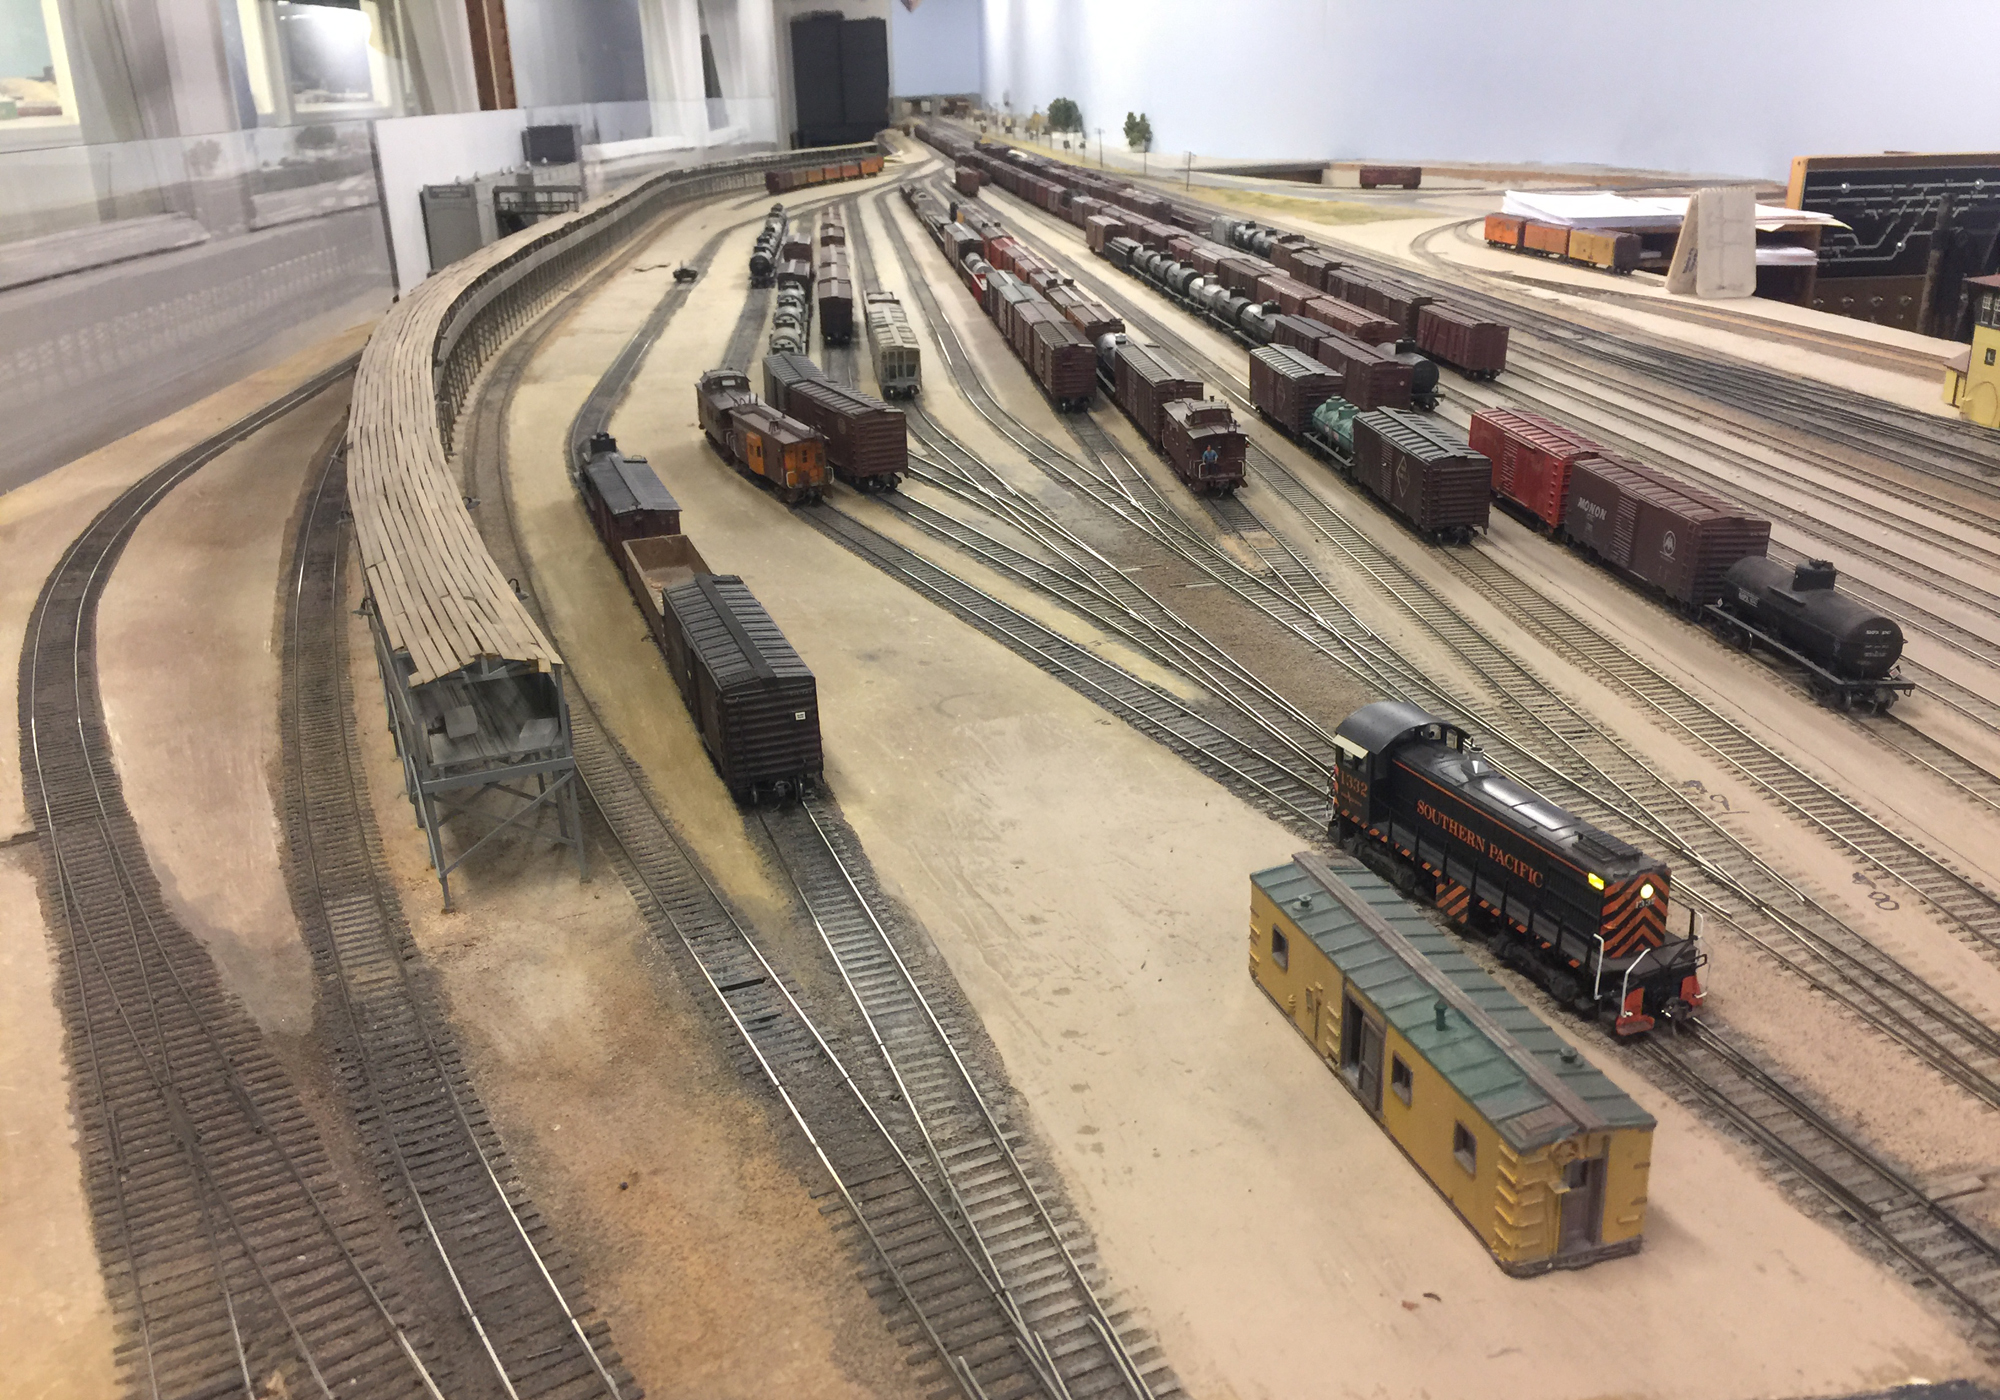 One of the many railroad yards at the La Mesa Model Railroad Club in San Diego, California, USA.